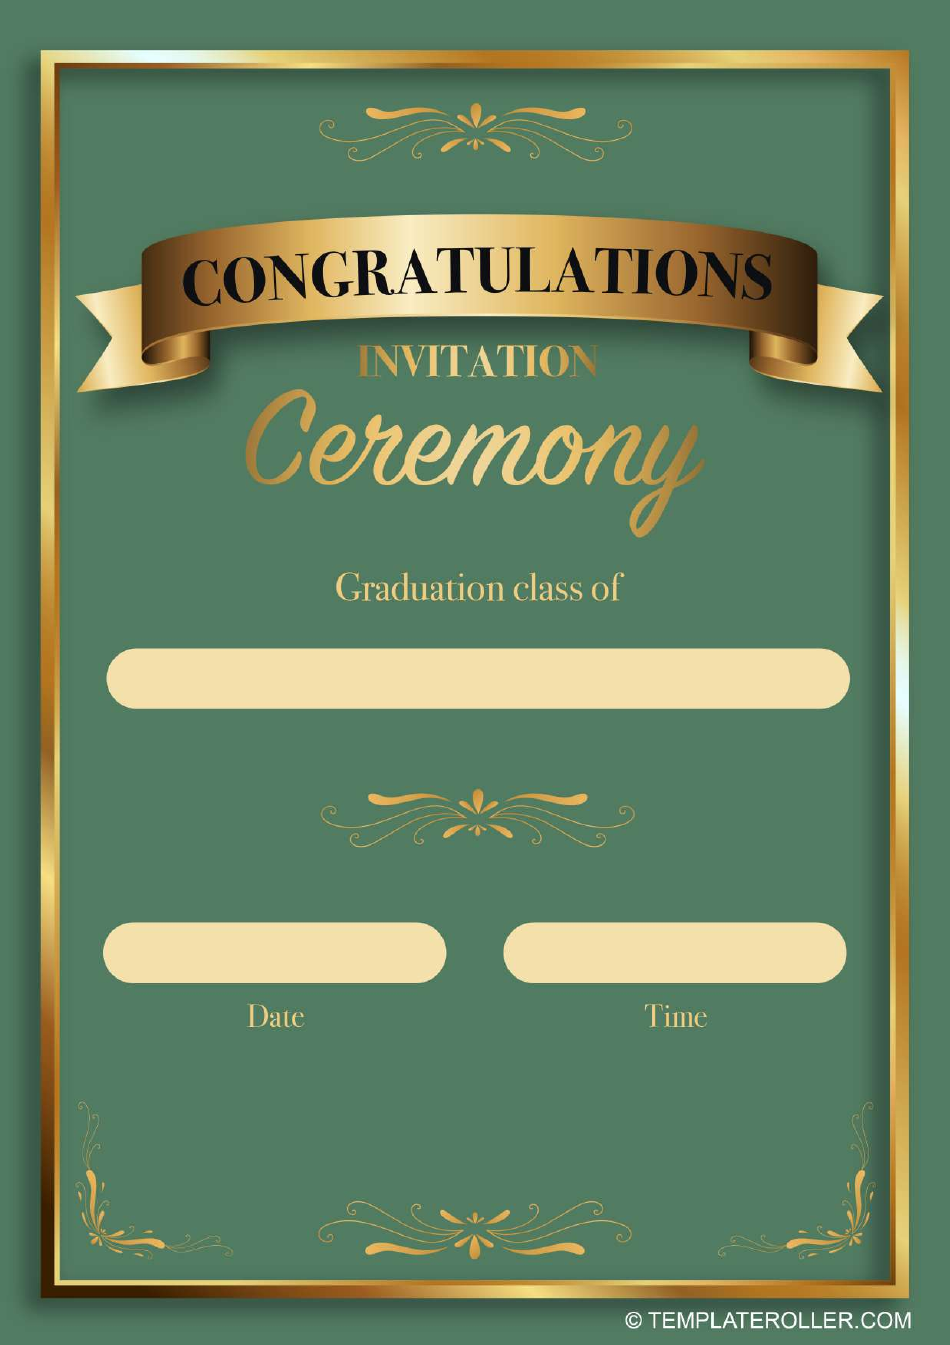 Graduation Invitation Template - Green Image Preview